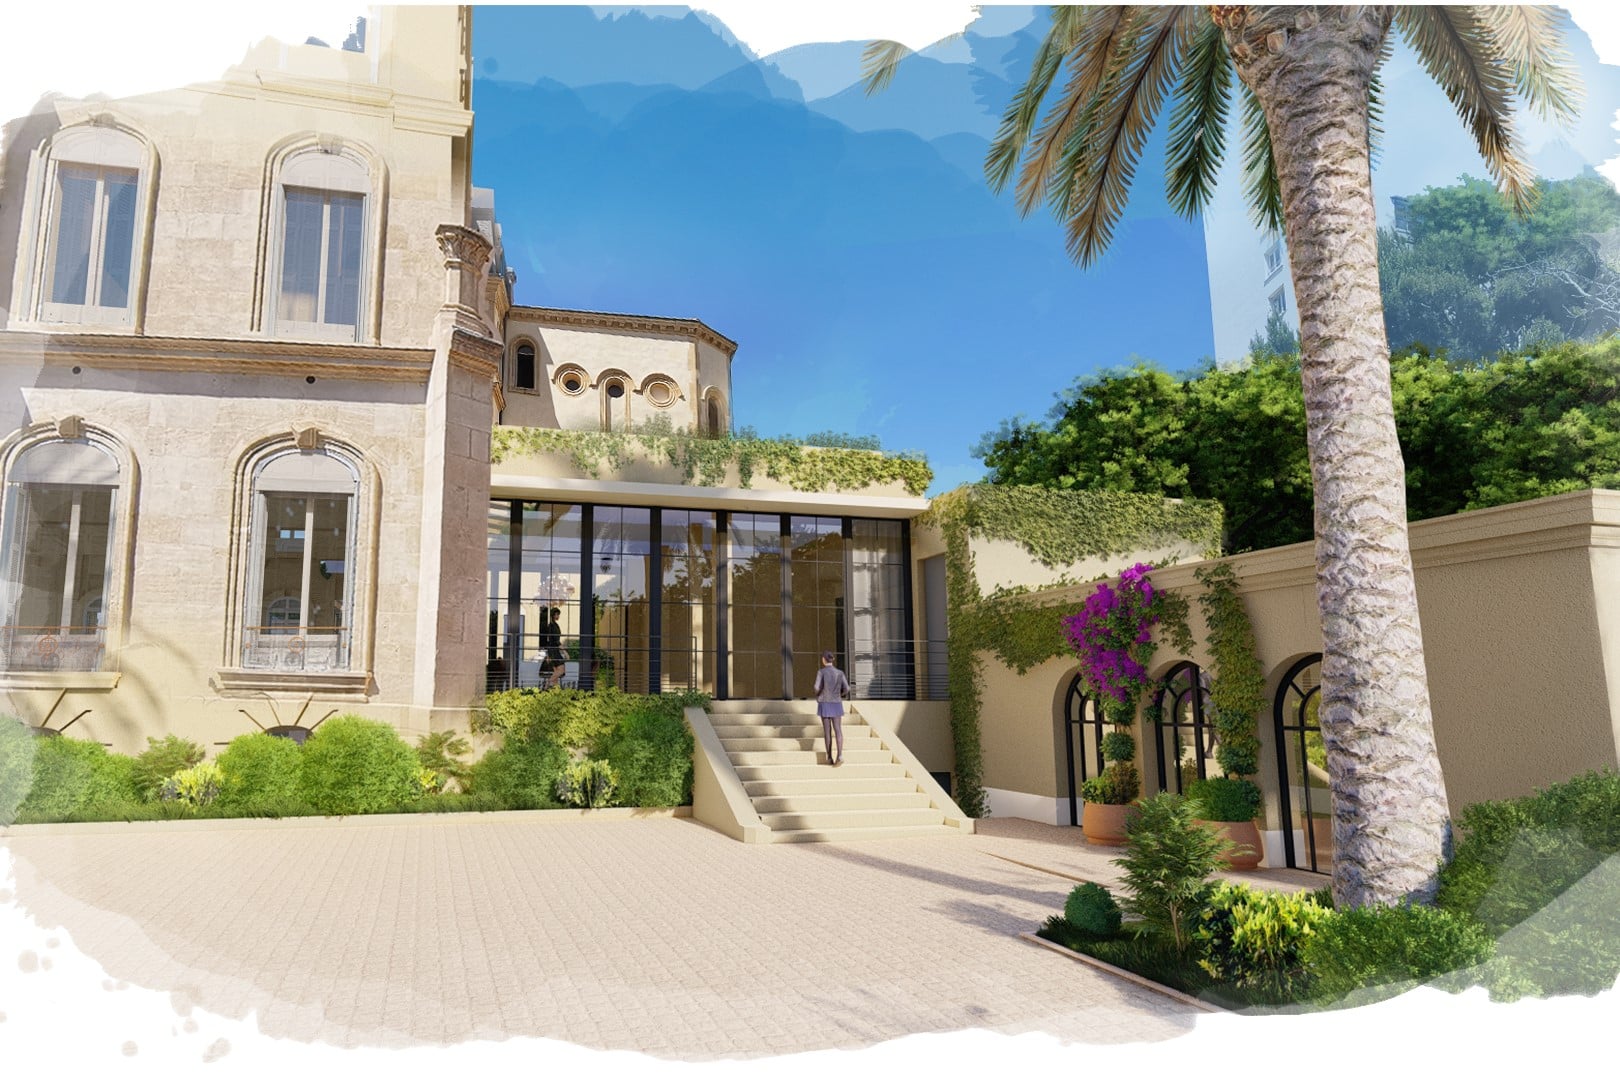 , L&#8217;hôtelier de la Villa Valmer retente sa chance avec un nouveau permis de construire, Made in Marseille